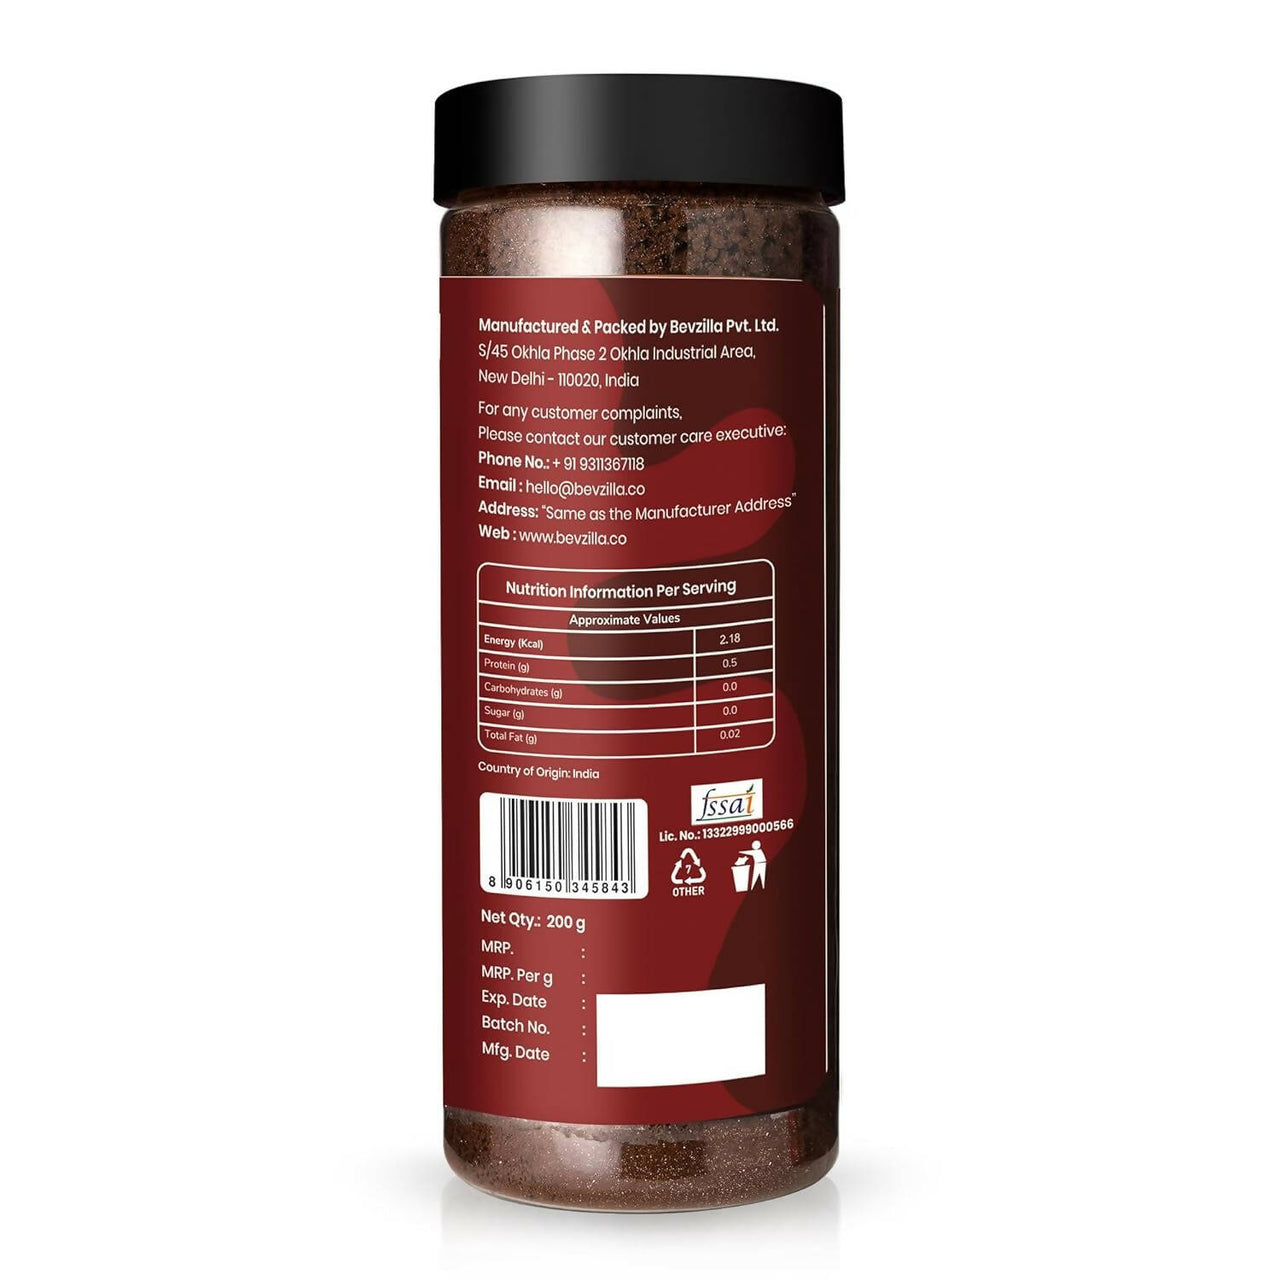 Bevzilla Chocolate & Mocha Coffee Powder 100% Pure Arabica - Distacart